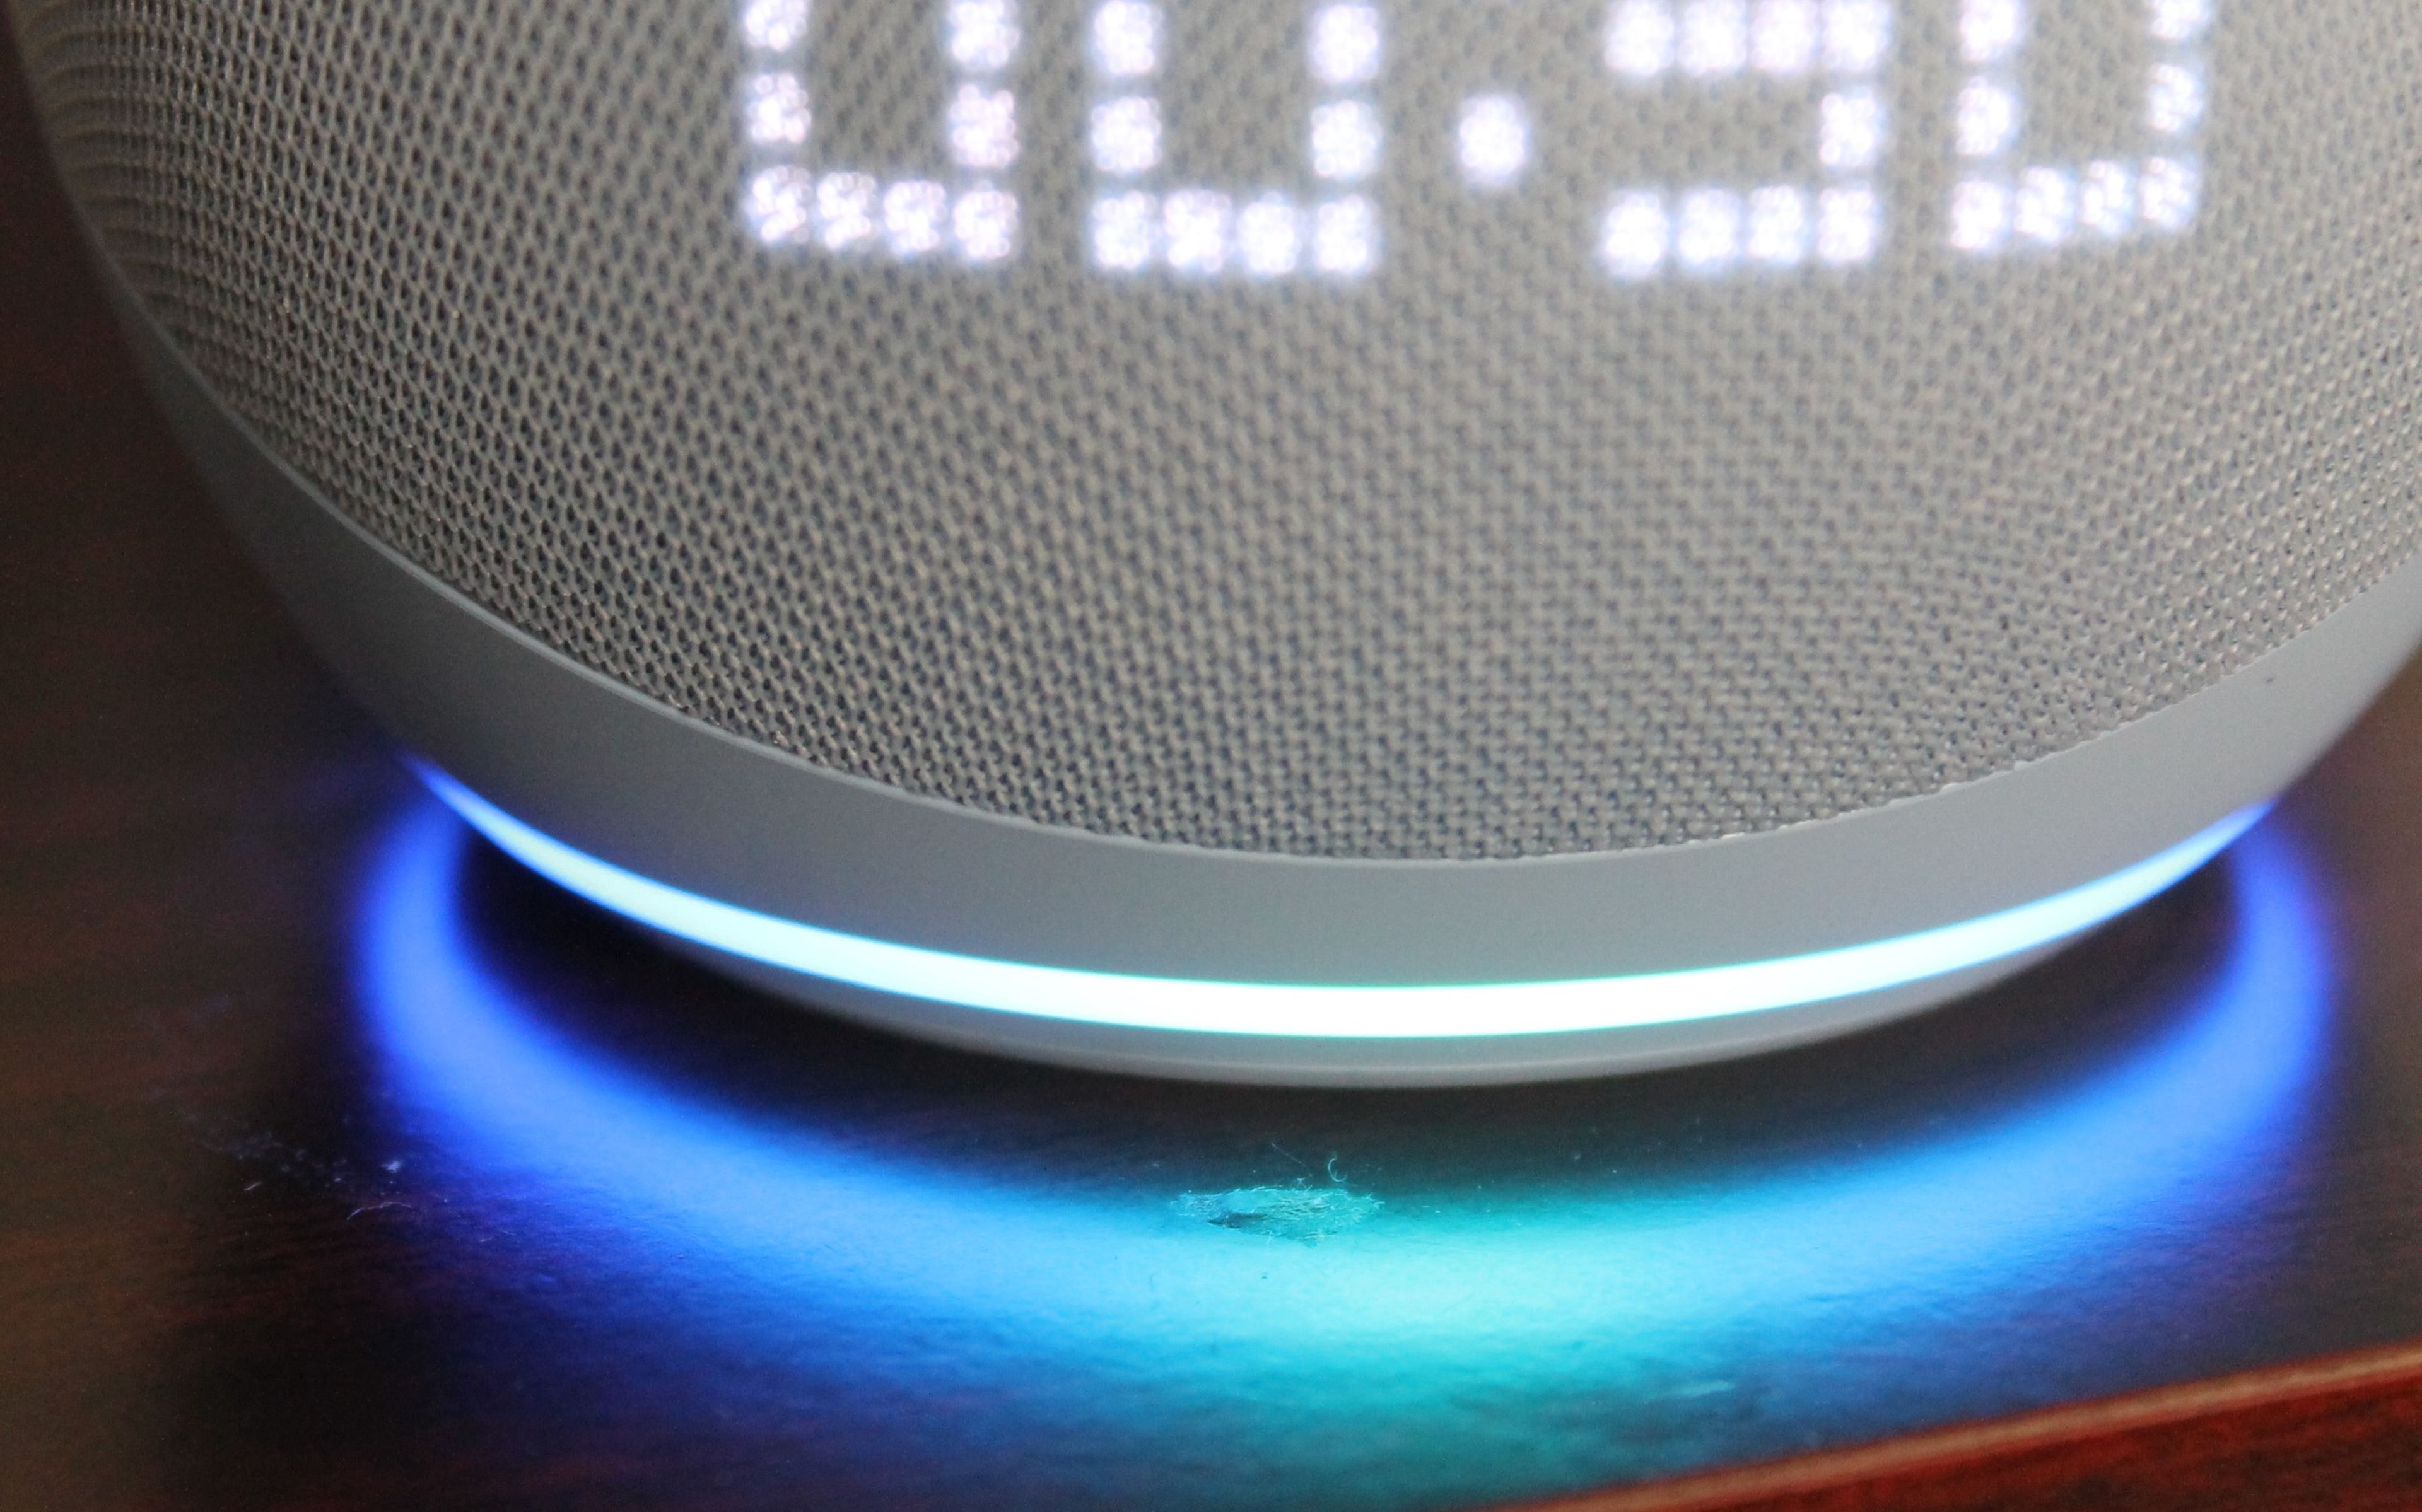 Echo Dot 5: altavoces inteligentes con o sin reloj – Review